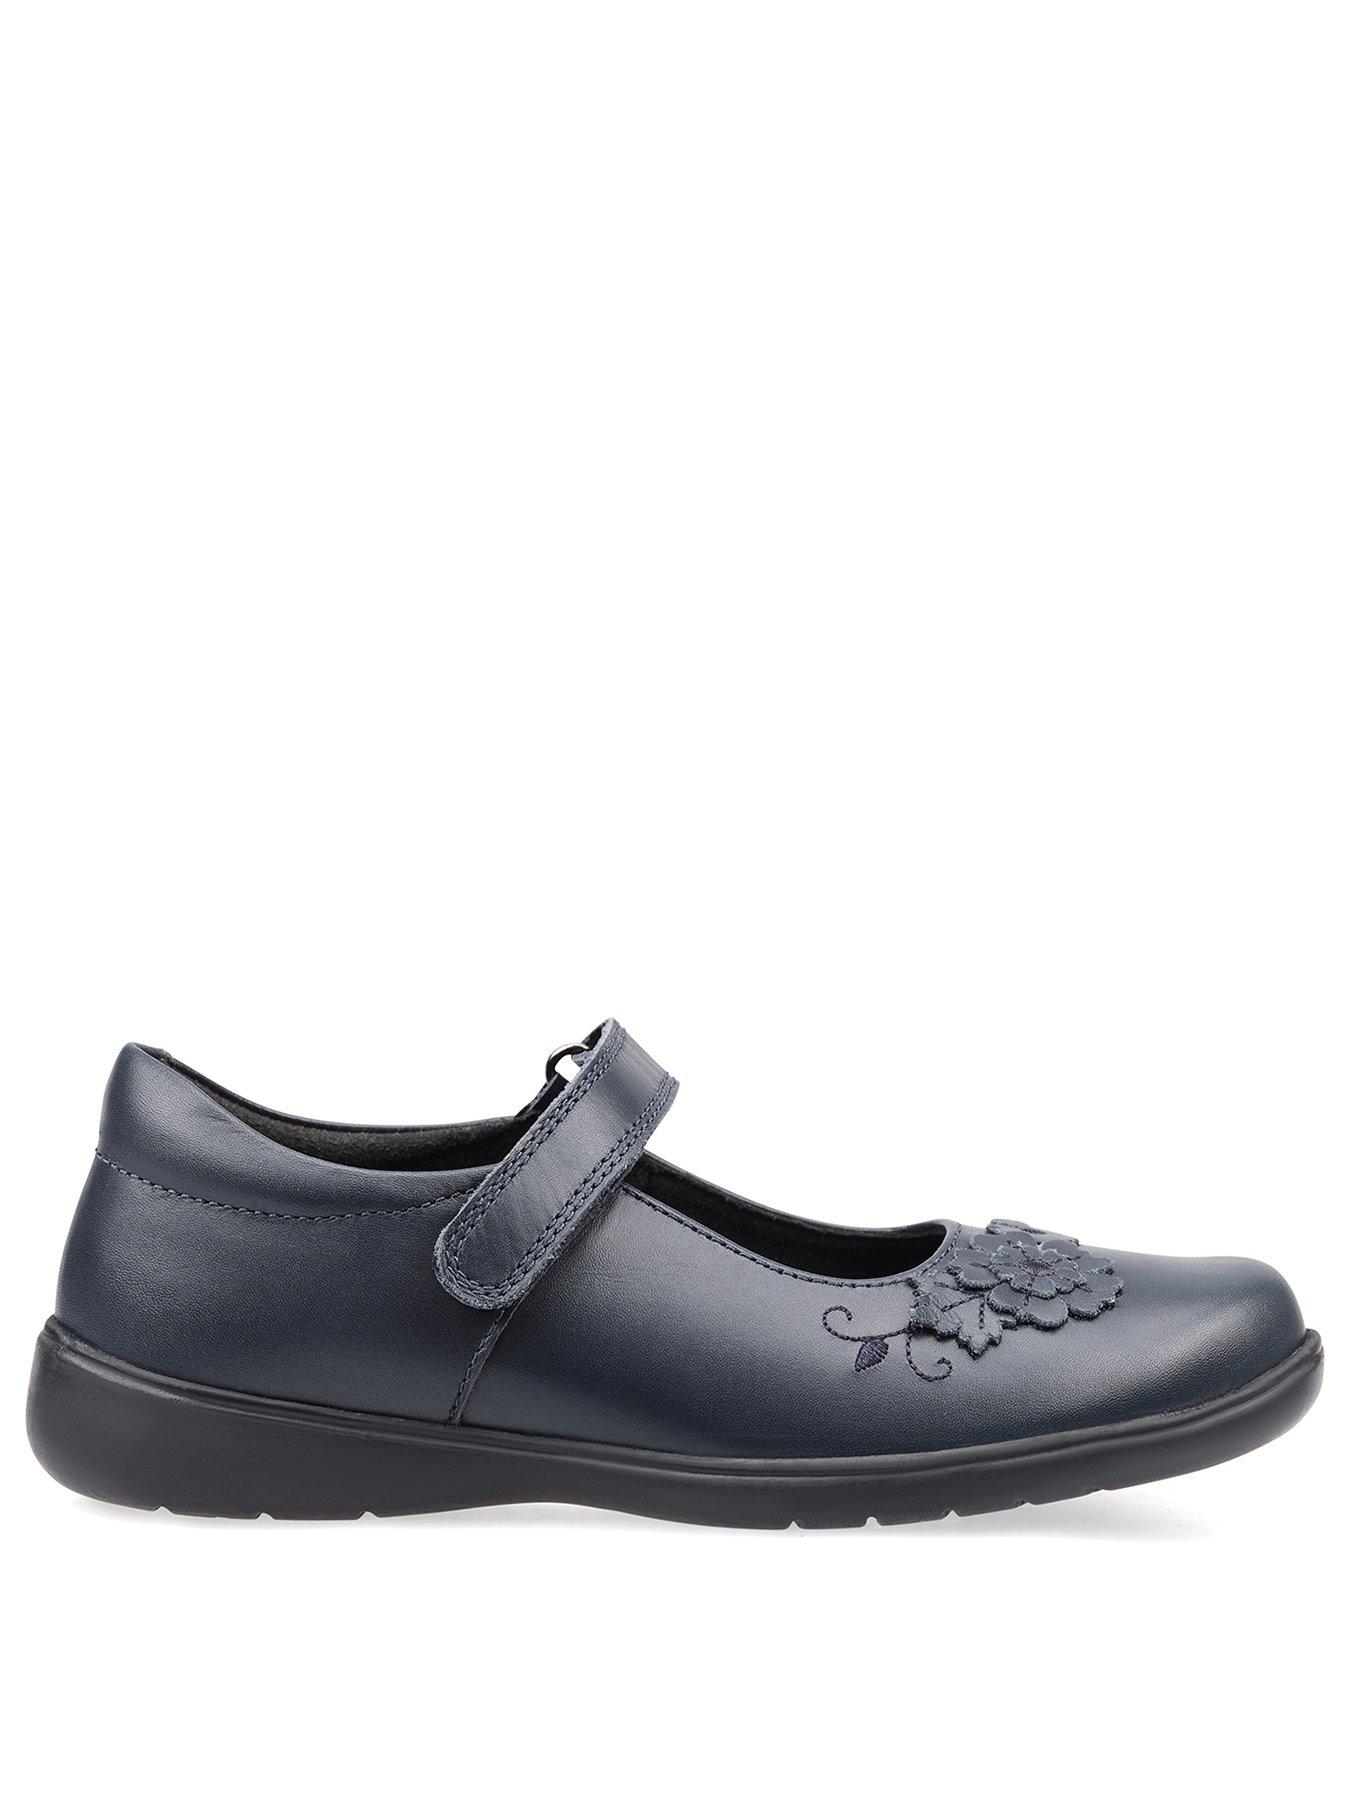 School & uniform Wish School Shoe - Navy Leather